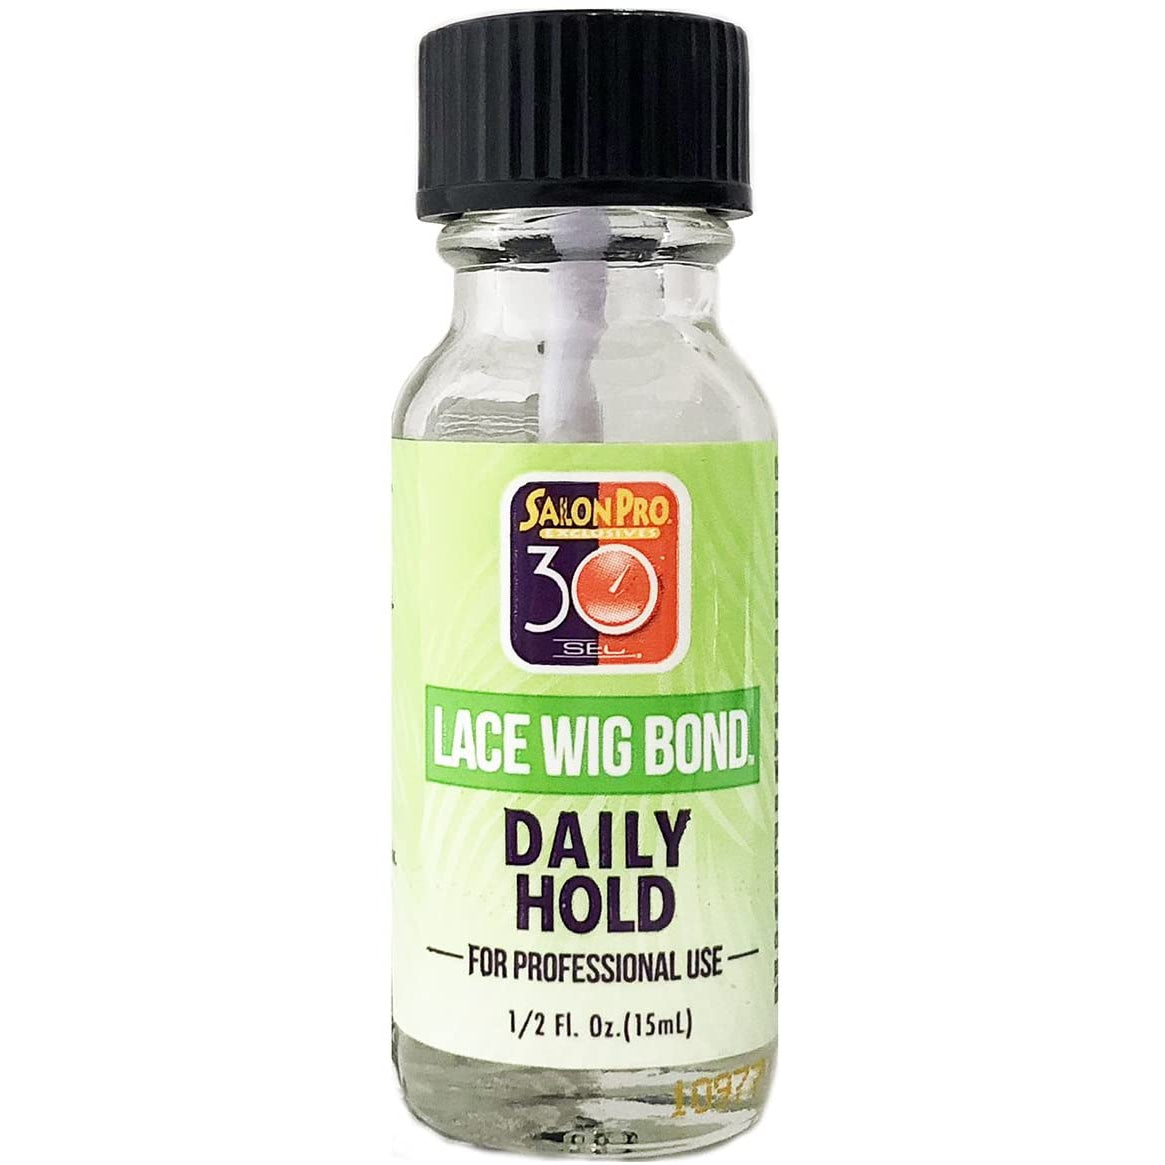 Salon Pro 30 Sec Lace Wig Bond Daily Hold 15ml 1